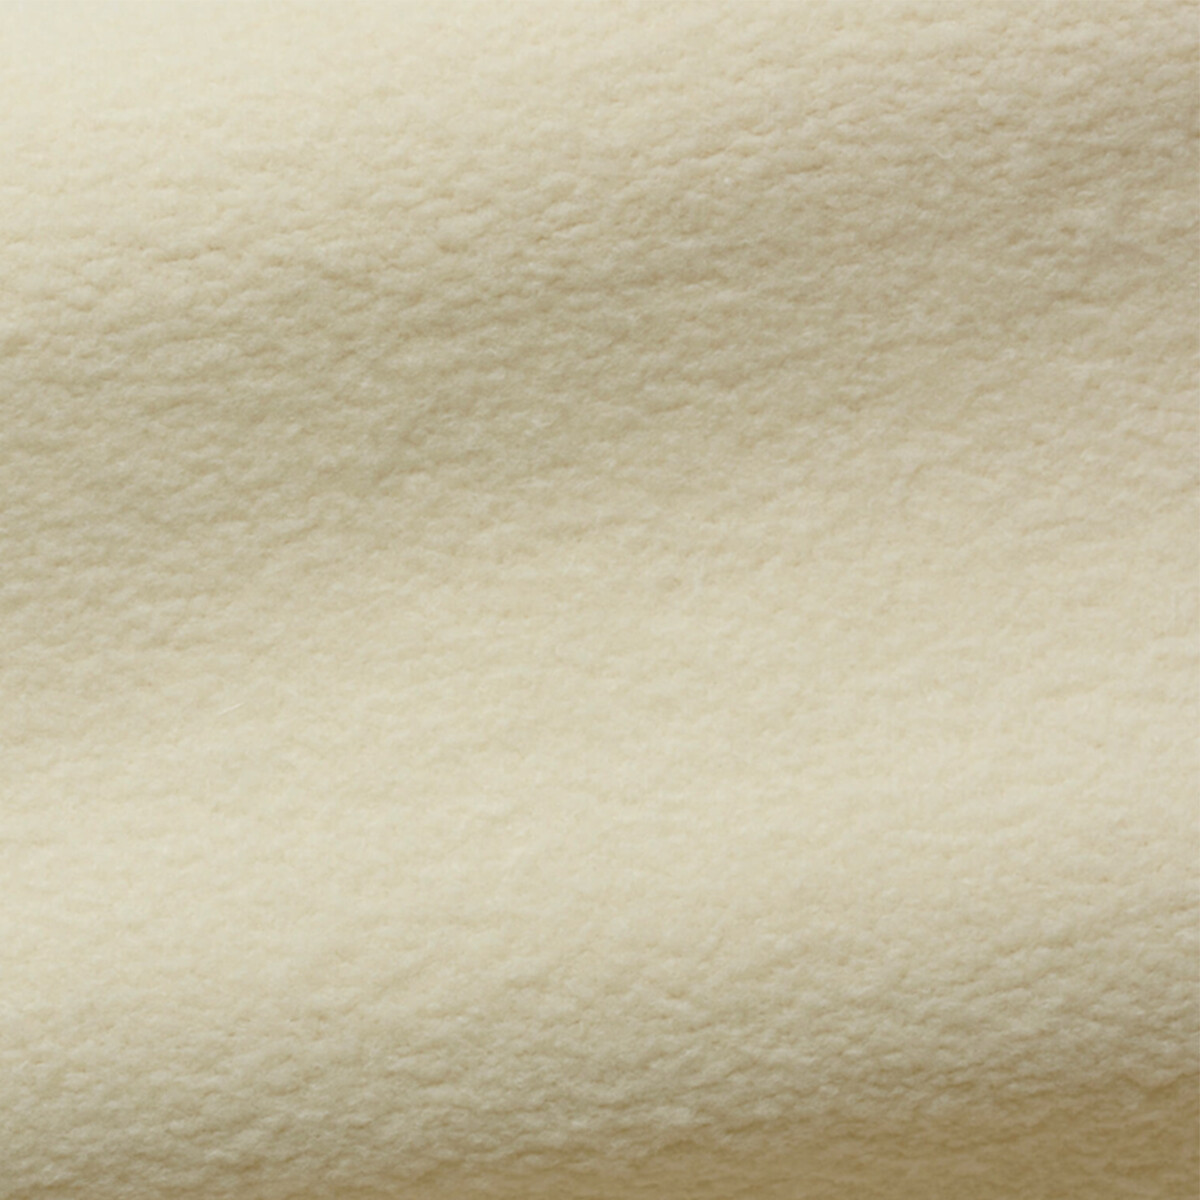 Nico large pouffe, Cream - L56 x W56 x H42 cm - Walnut/Wool/Cotton - image 2